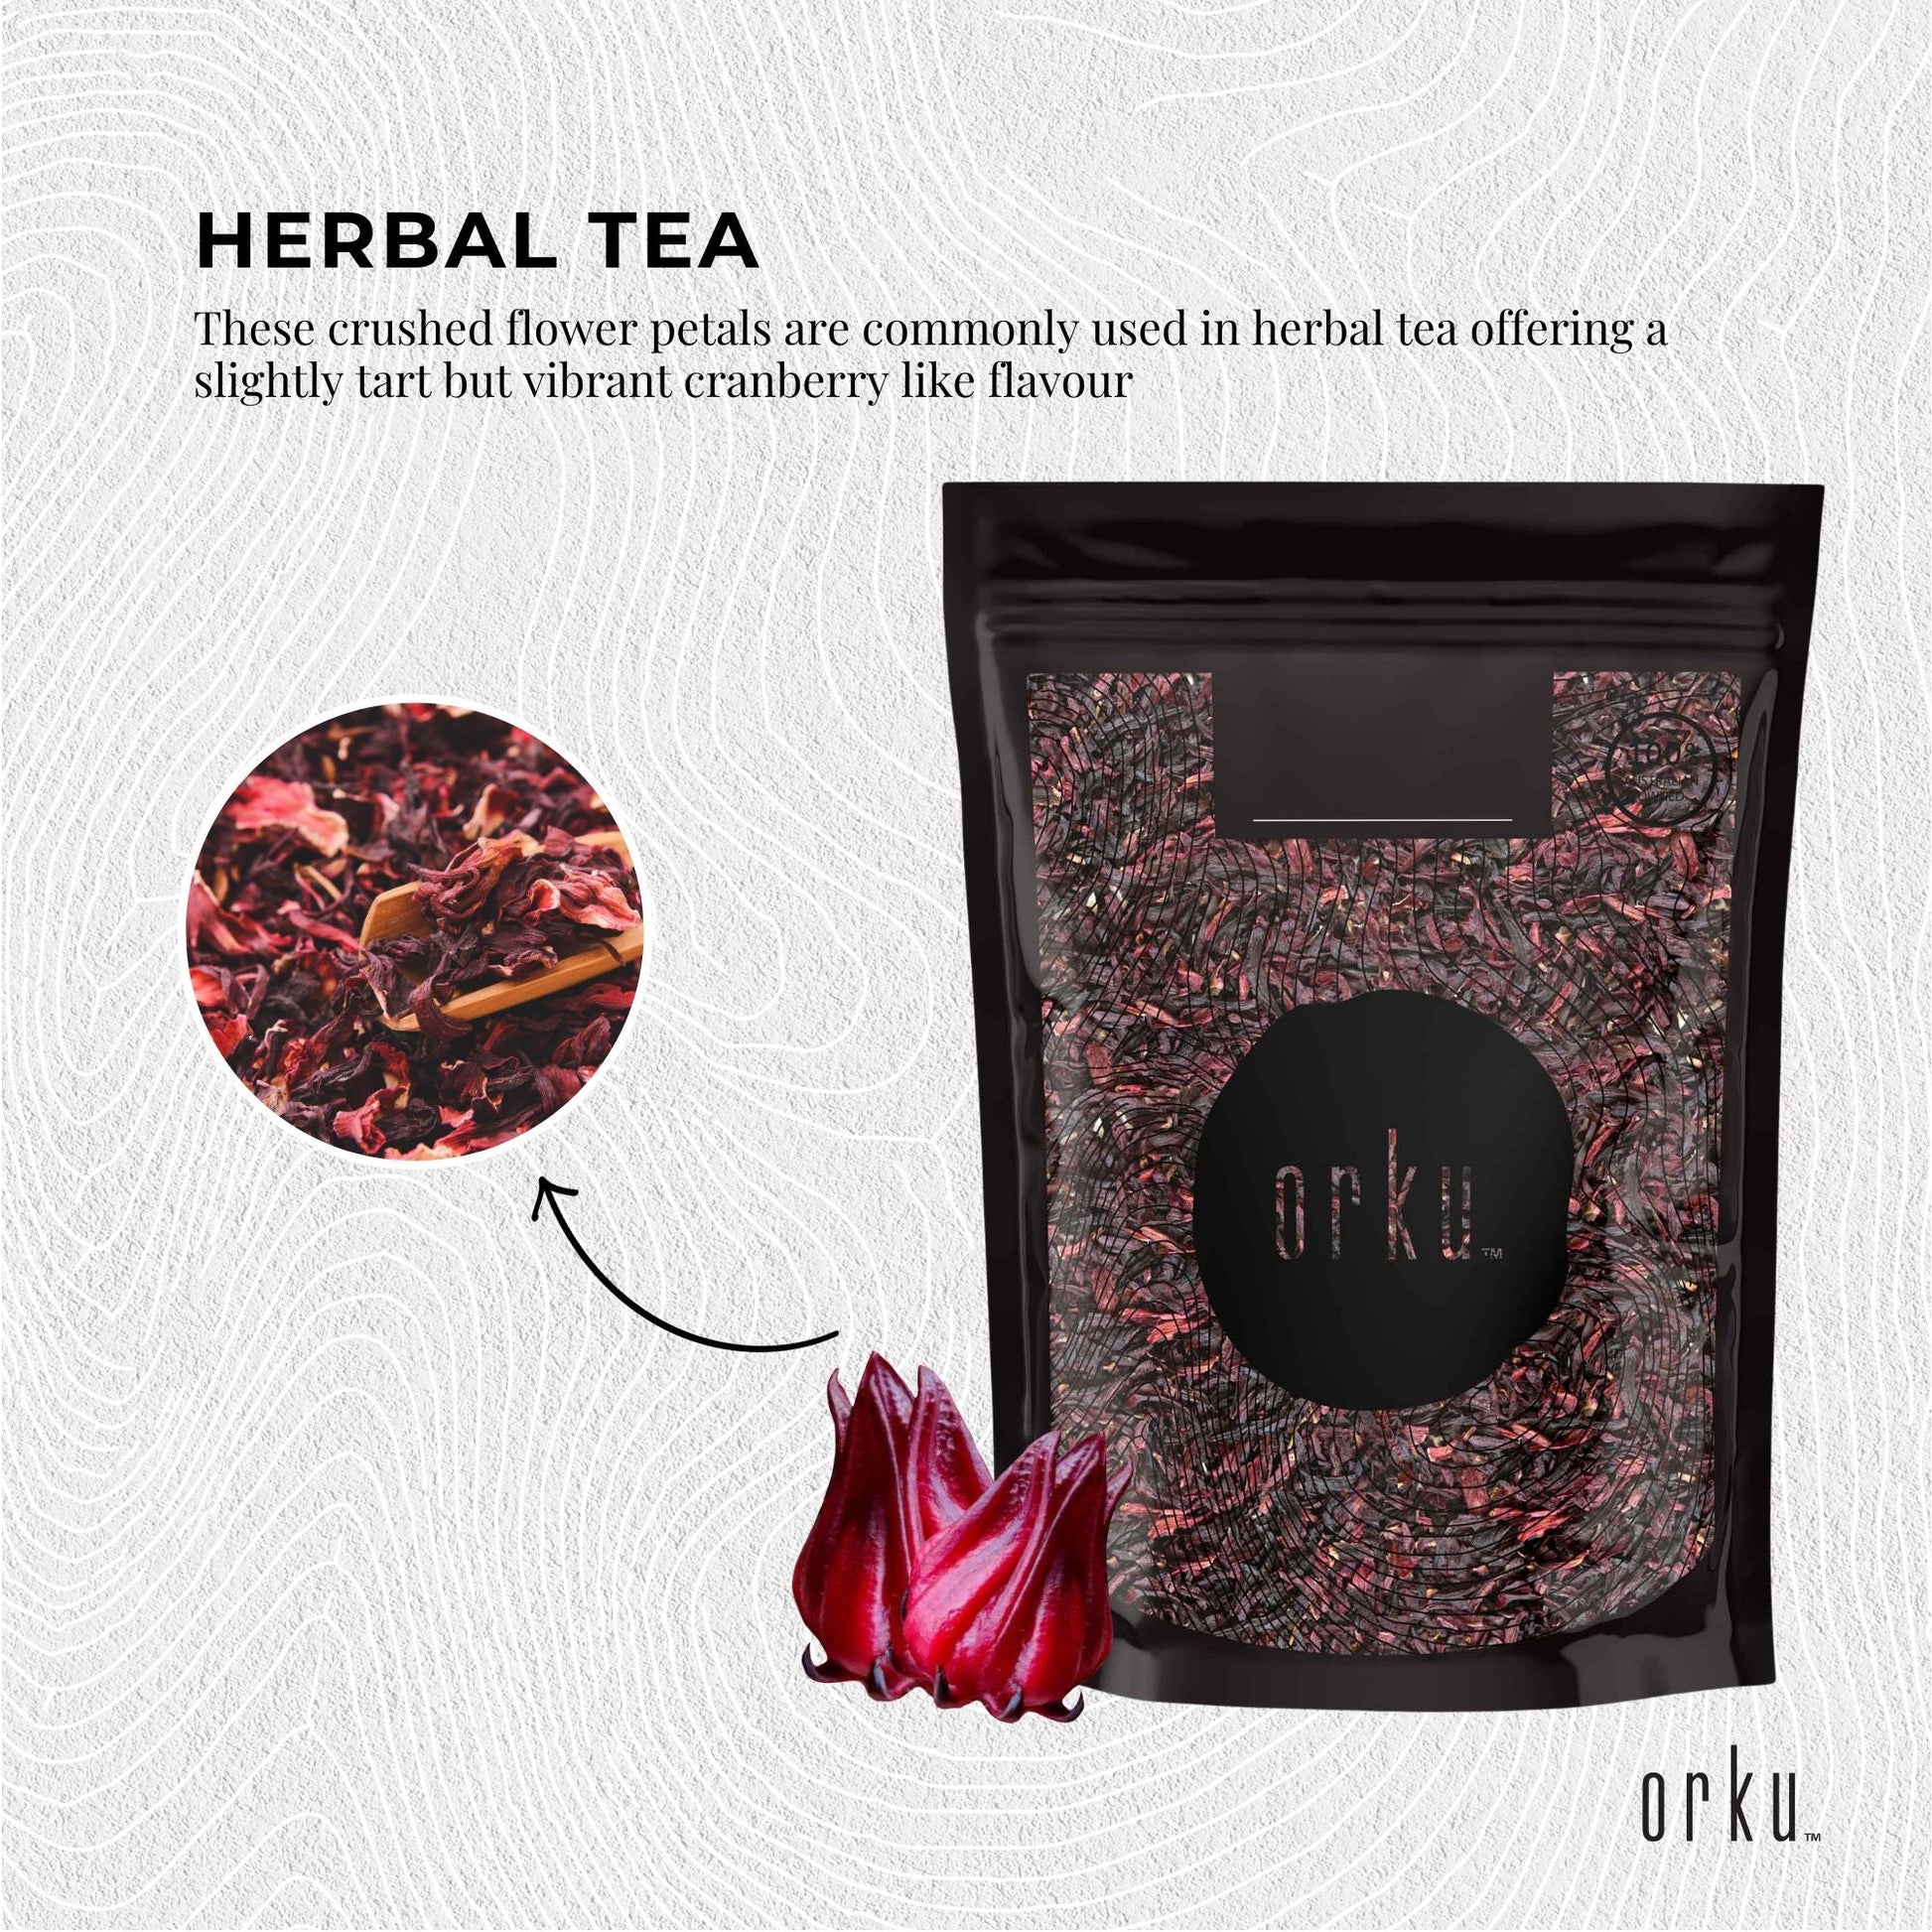 250g Organic Hibiscus Rosella Flower Crushed - Dried Herbal Tea Supplement